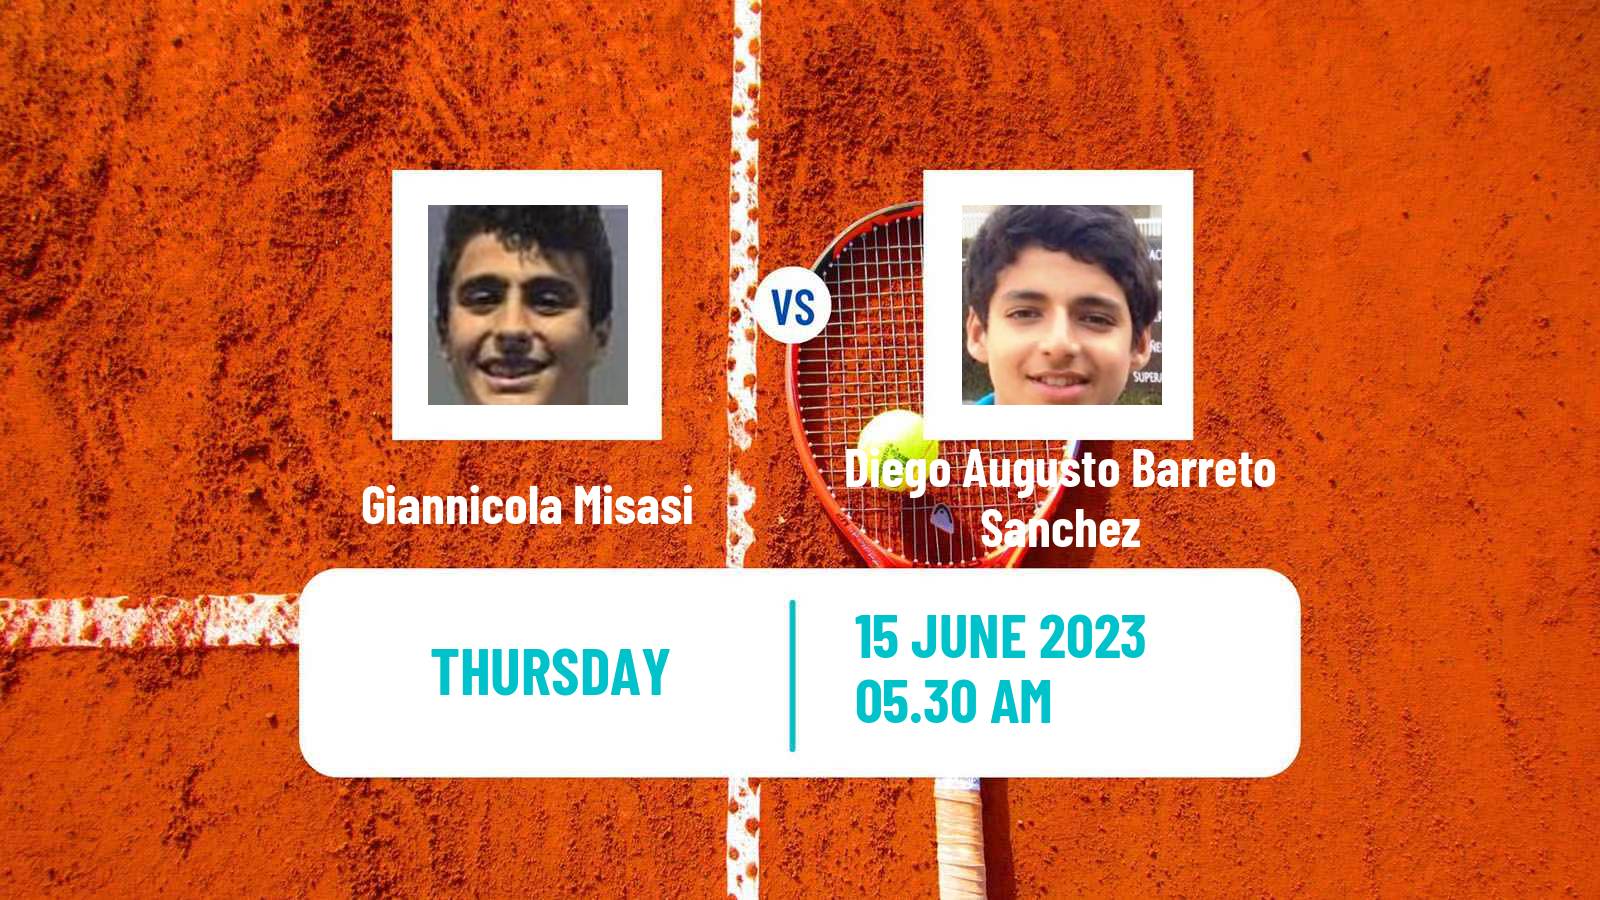 Tennis ITF M15 Rabat Men Giannicola Misasi - Diego Augusto Barreto Sanchez